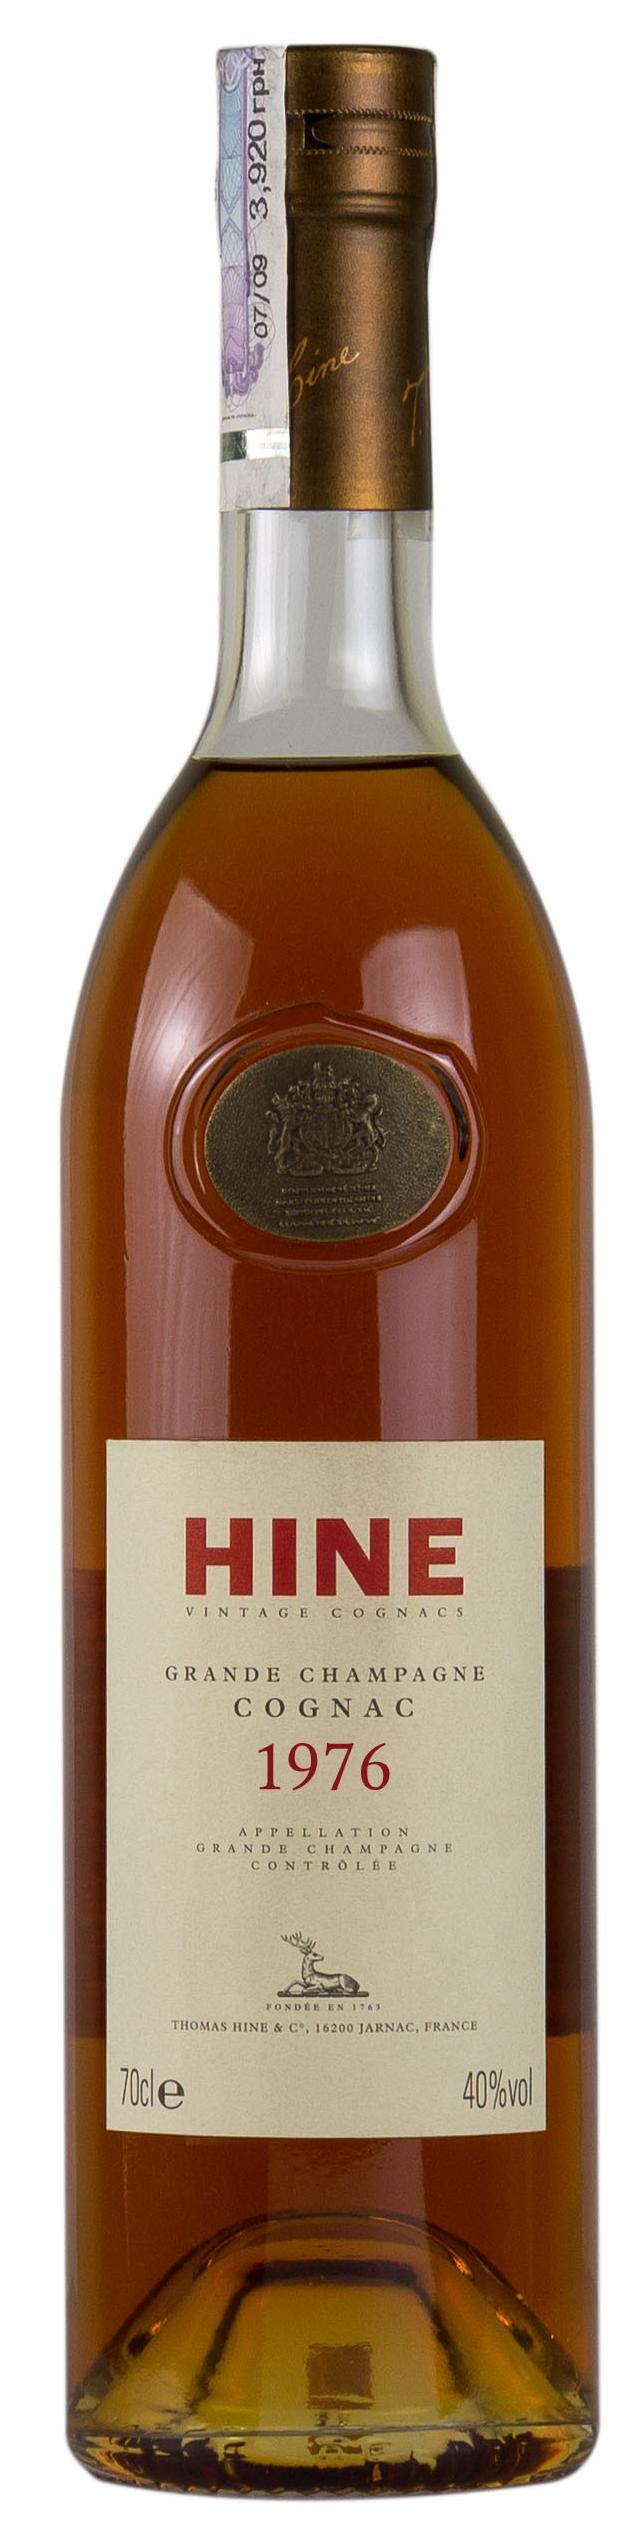 Hine  Vintage 1976 Grande Champagne Jarnac - 3